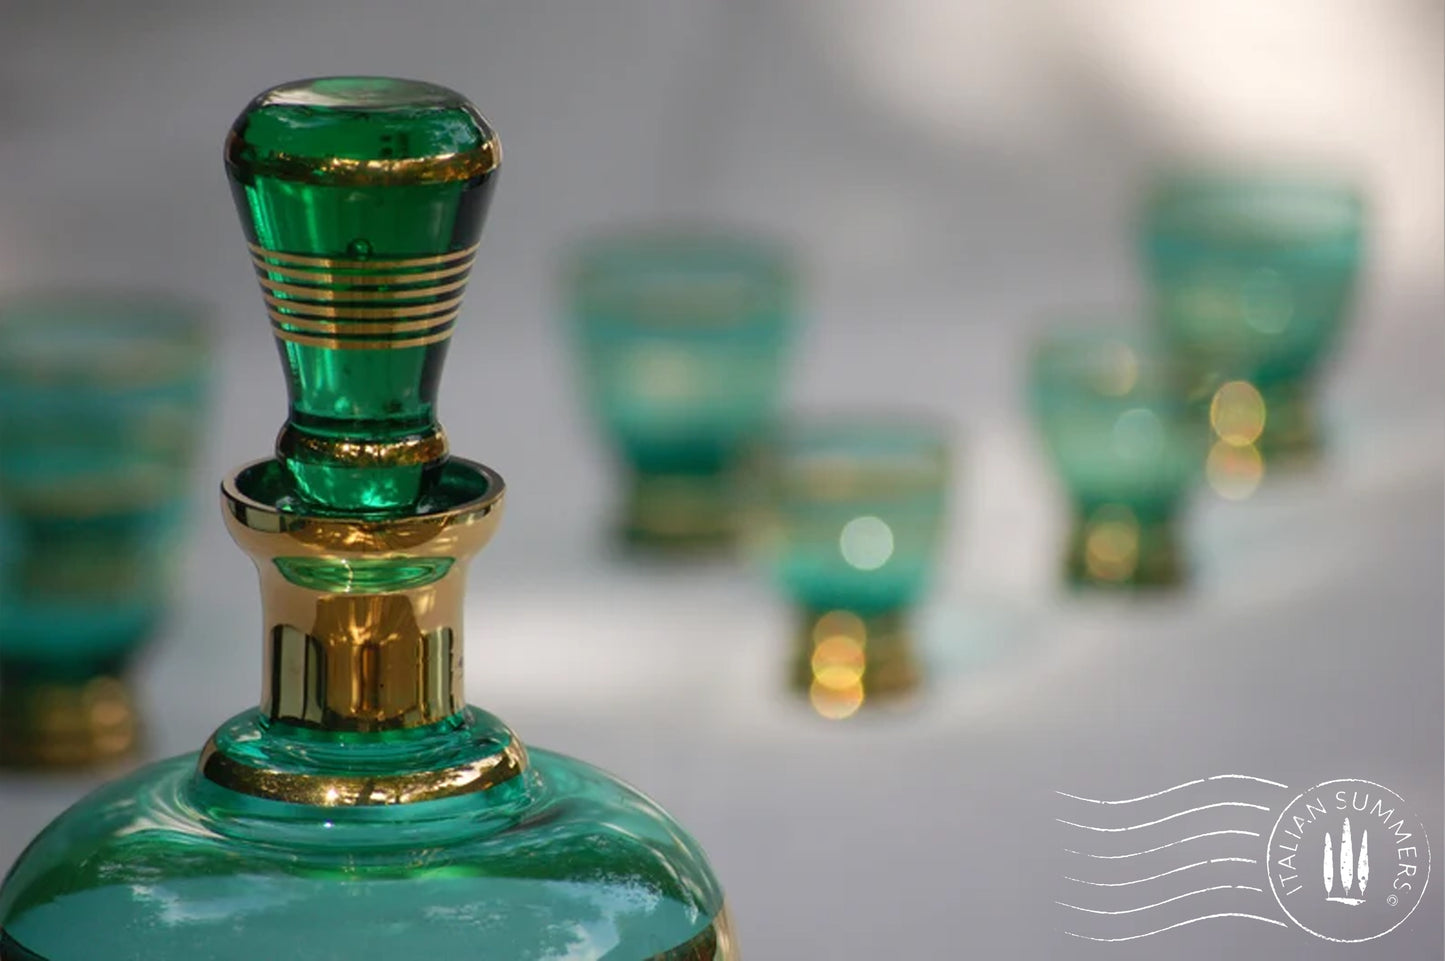 RARE Vintage liquor set from Montecarlo, Verrerie de Monaco, emerald and gold colored glass set, carafe glasses, green glass set